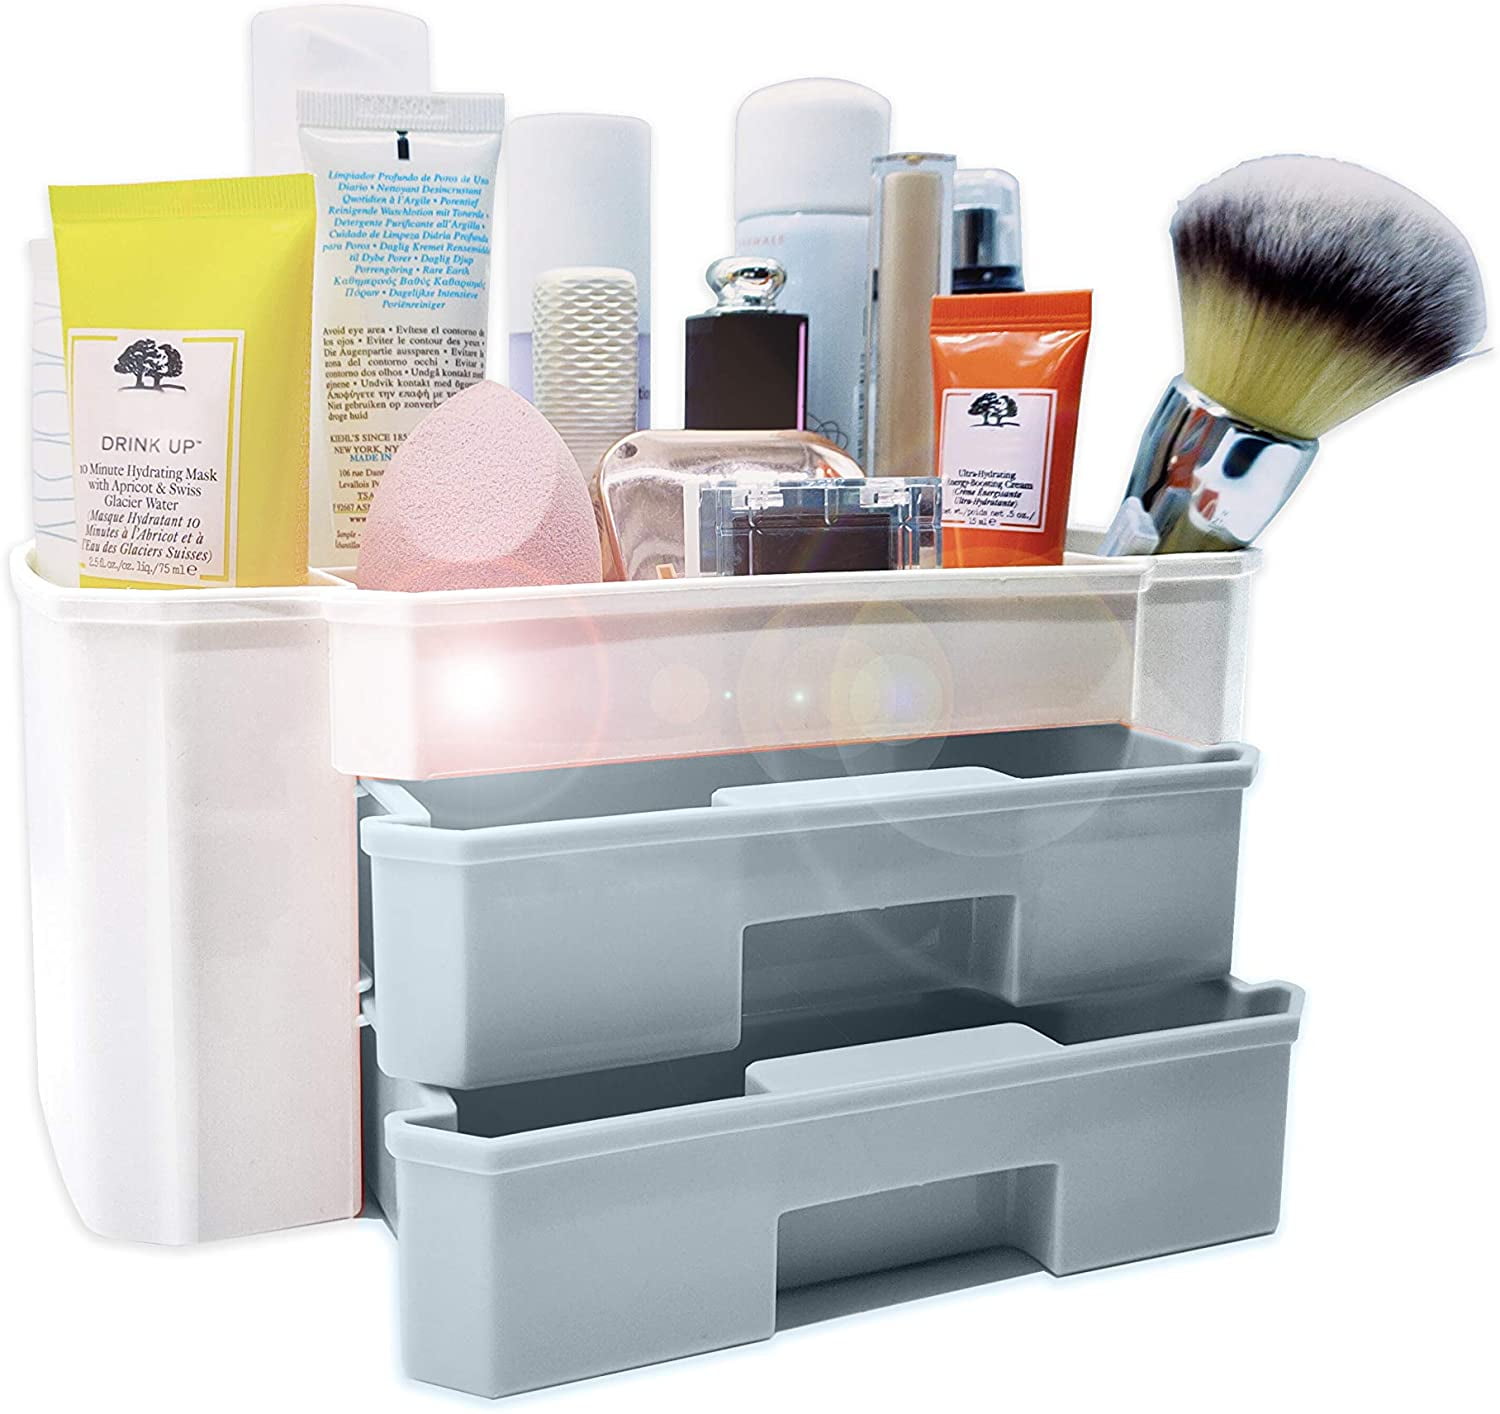 Cheap Desktop Makeup Organizer Drawer Type Cosmetic Storage Box Make Up  Case Brush Holder Lipstick Skincare Makeup Tables